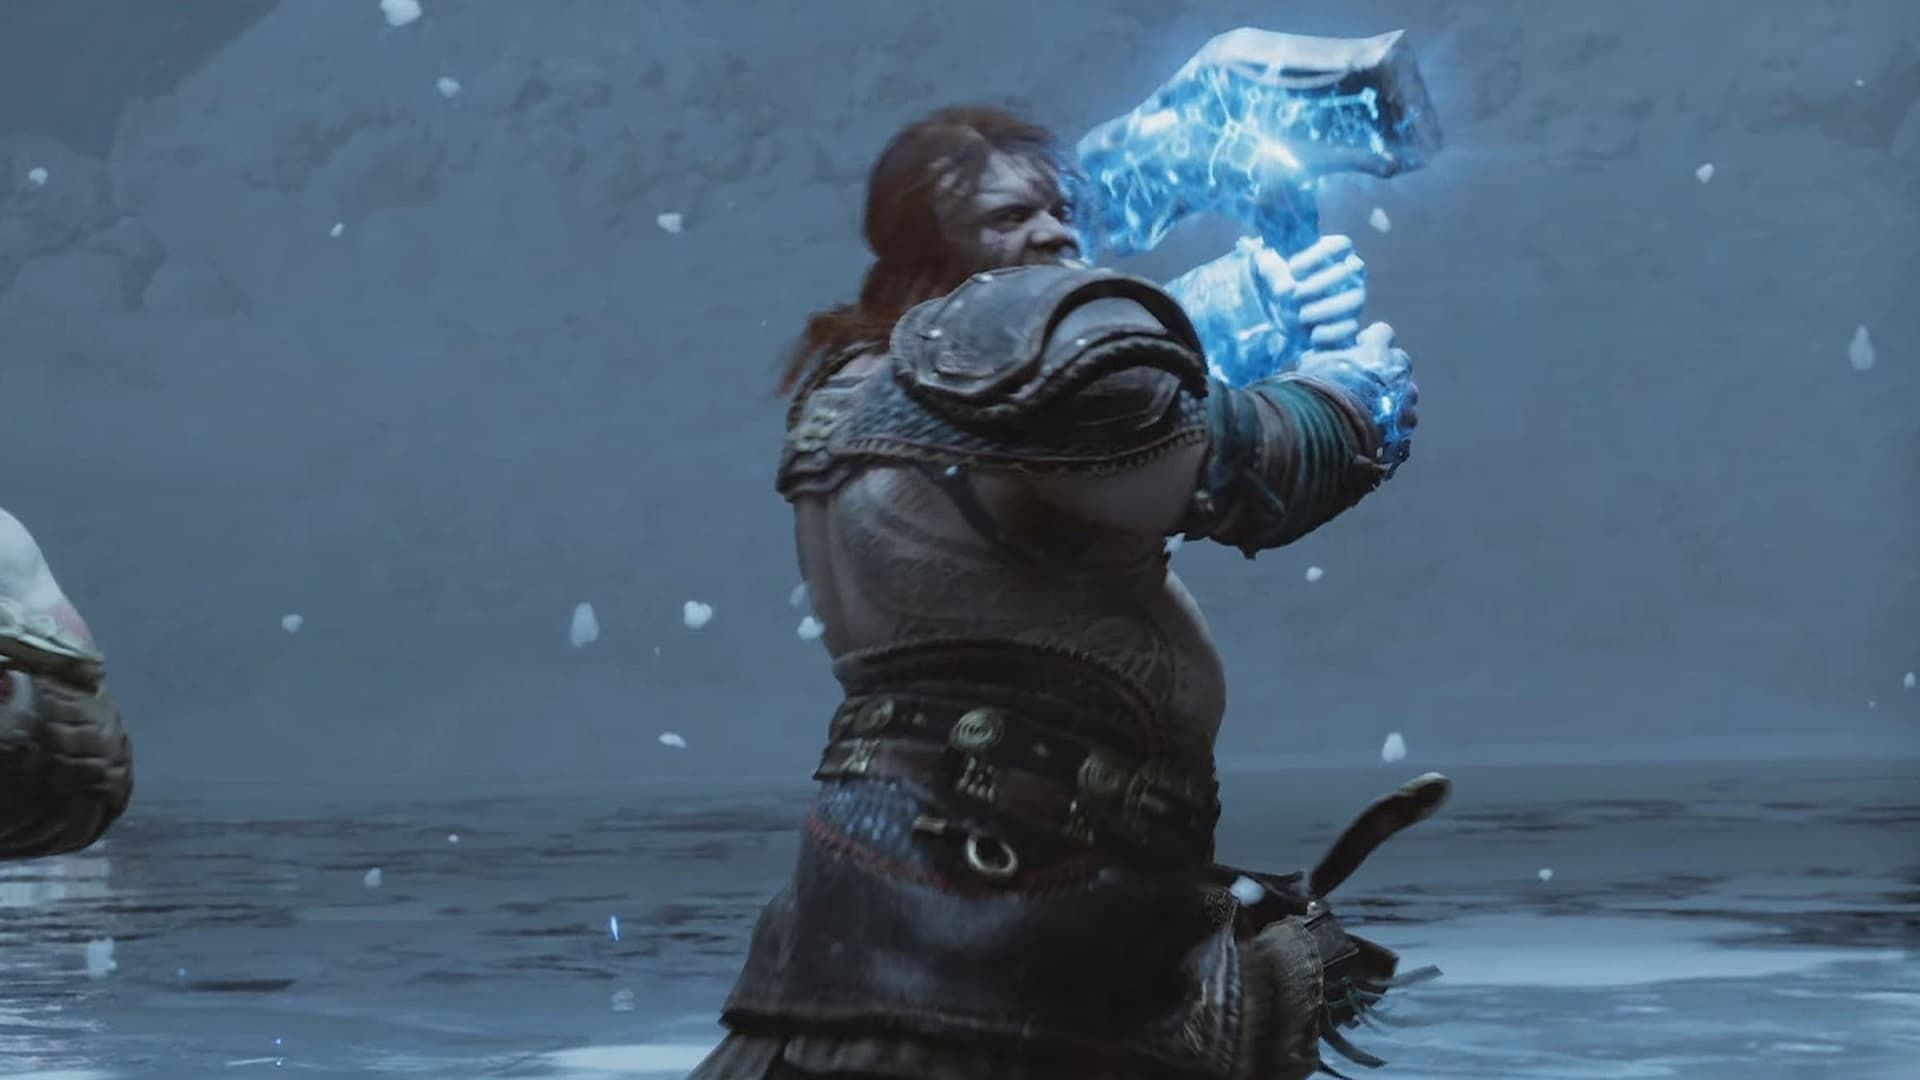 God of War: Ragnarok Rowing Animation Criticism Receives Backlash